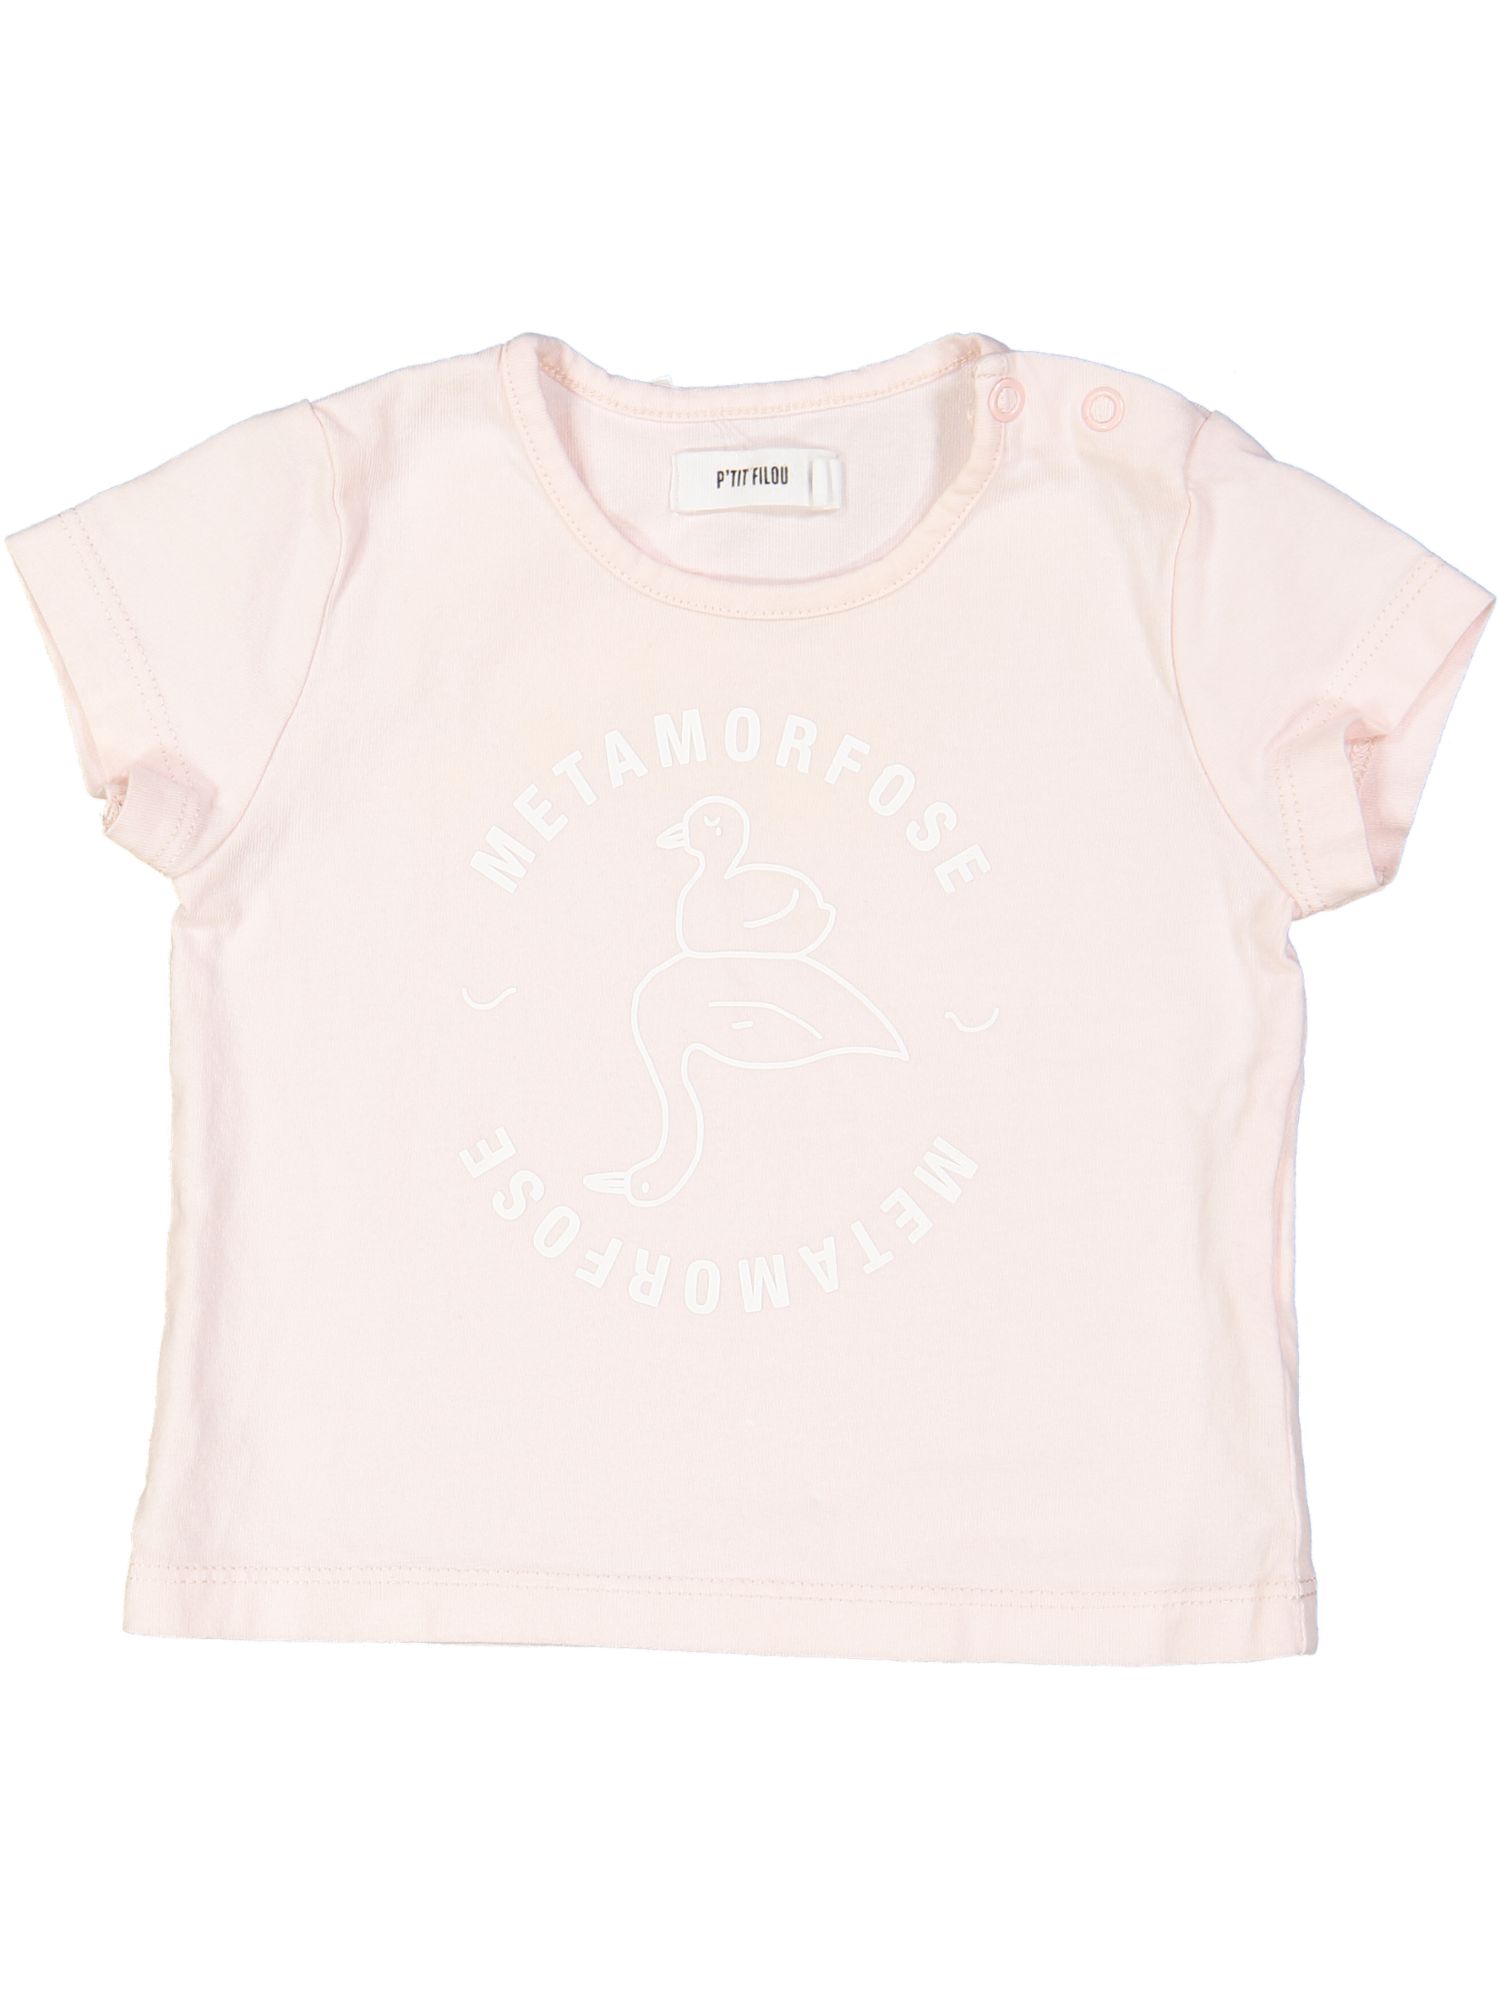 t-shirt roze metamorfose 03m